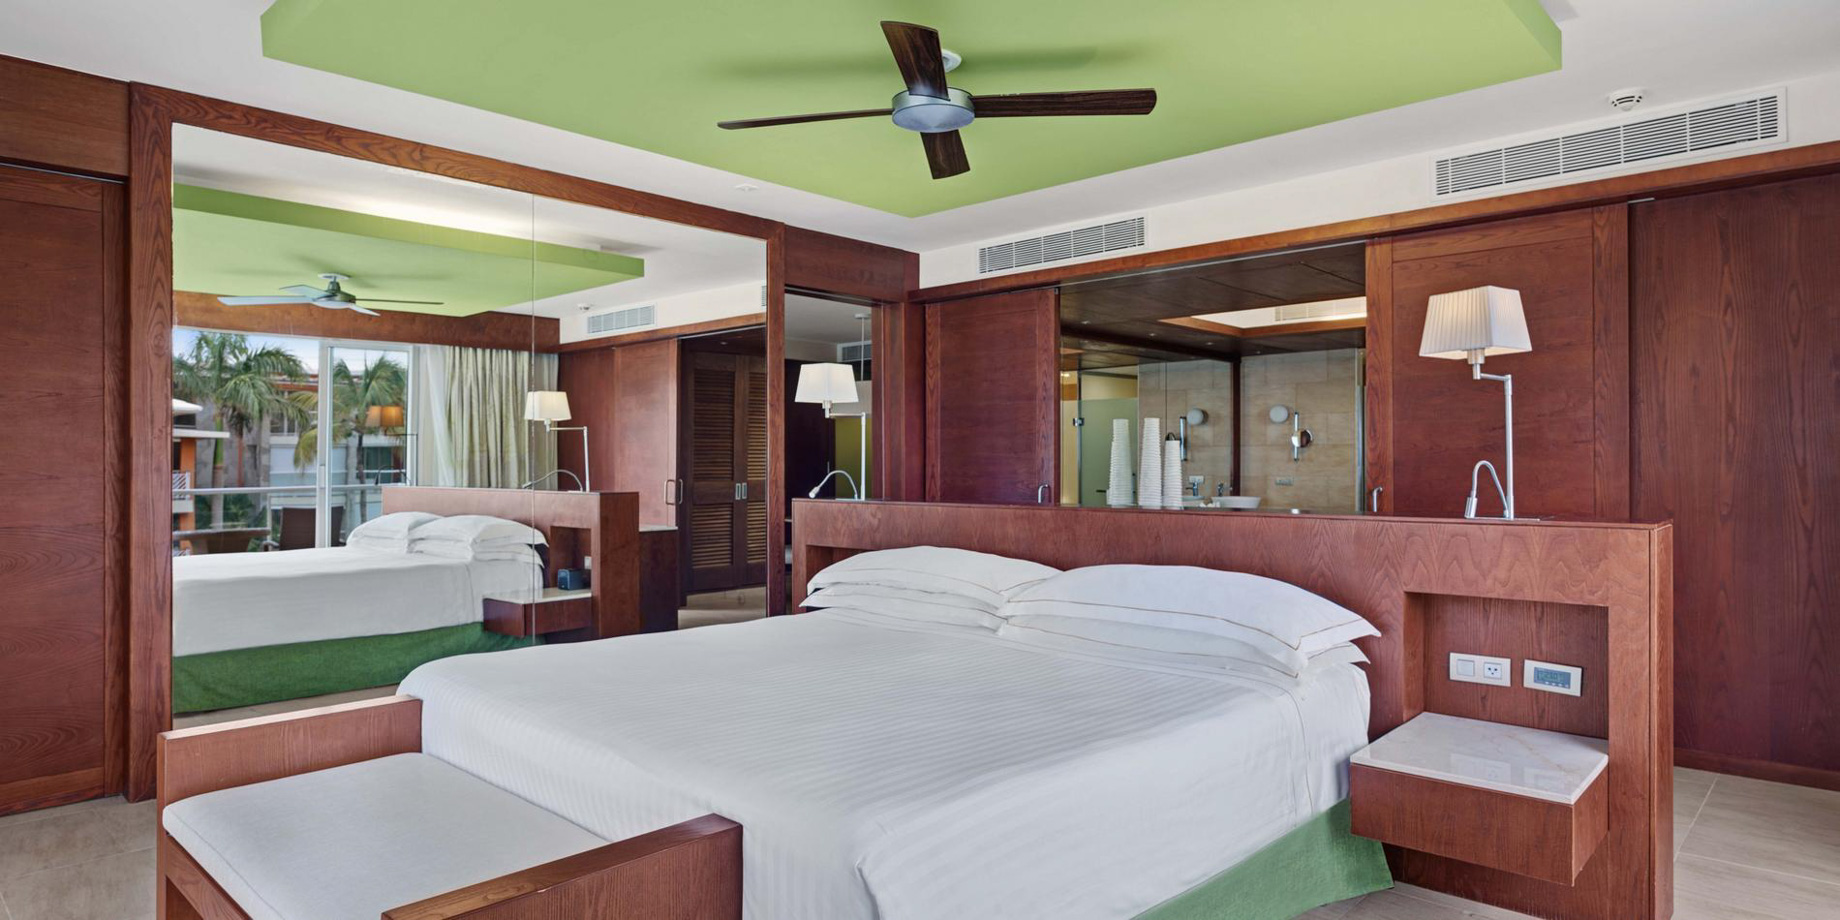 Barceló Bávaro Palace Hotel Grand Resort – Punta Cana, Dominican Republic – Panoramic Suite Sea Front Premium Level Room